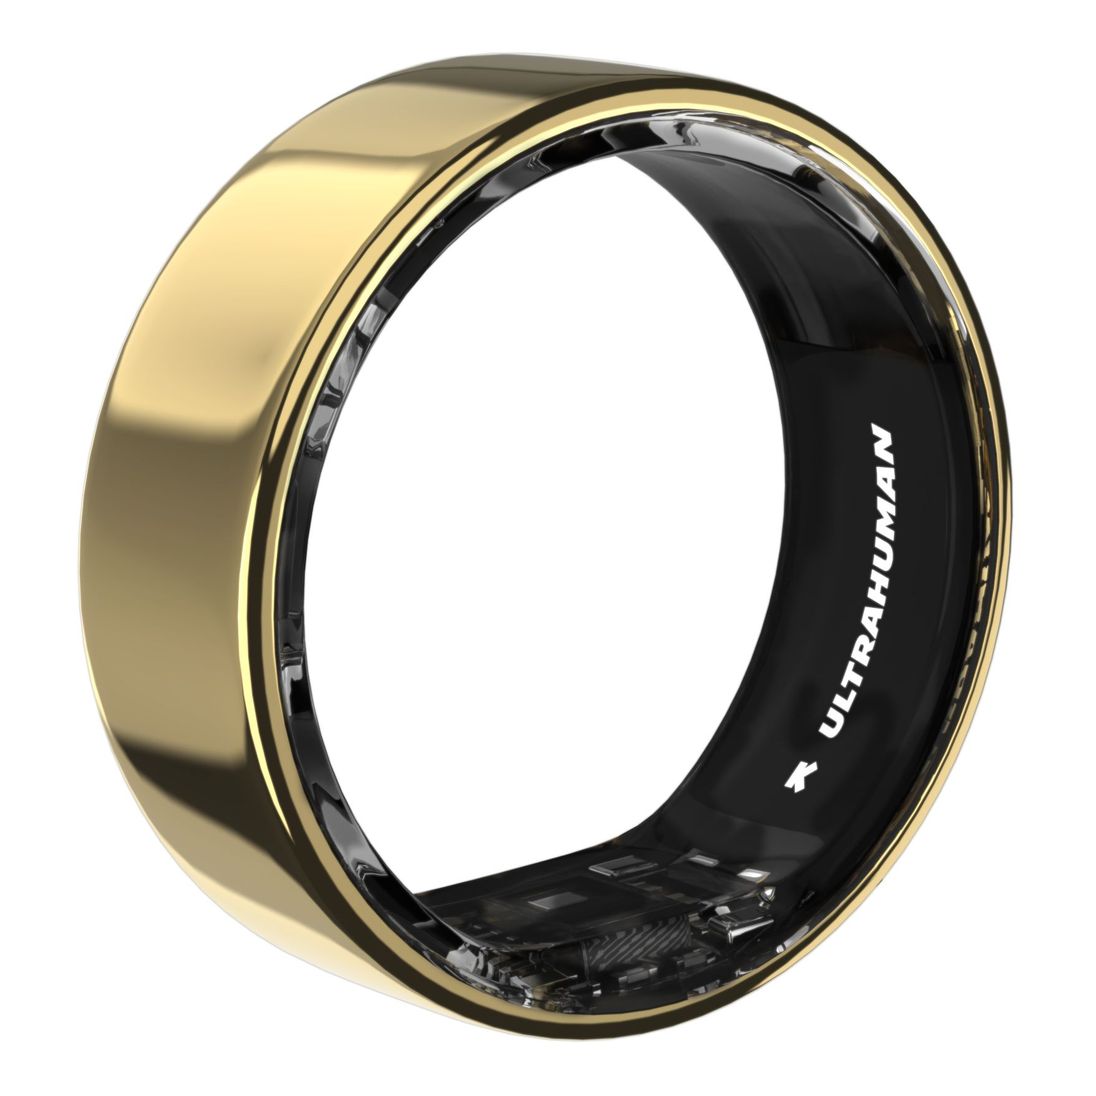 Ultrahuman Ring AIR Smart Ring - Size 10 - Bionic Gold